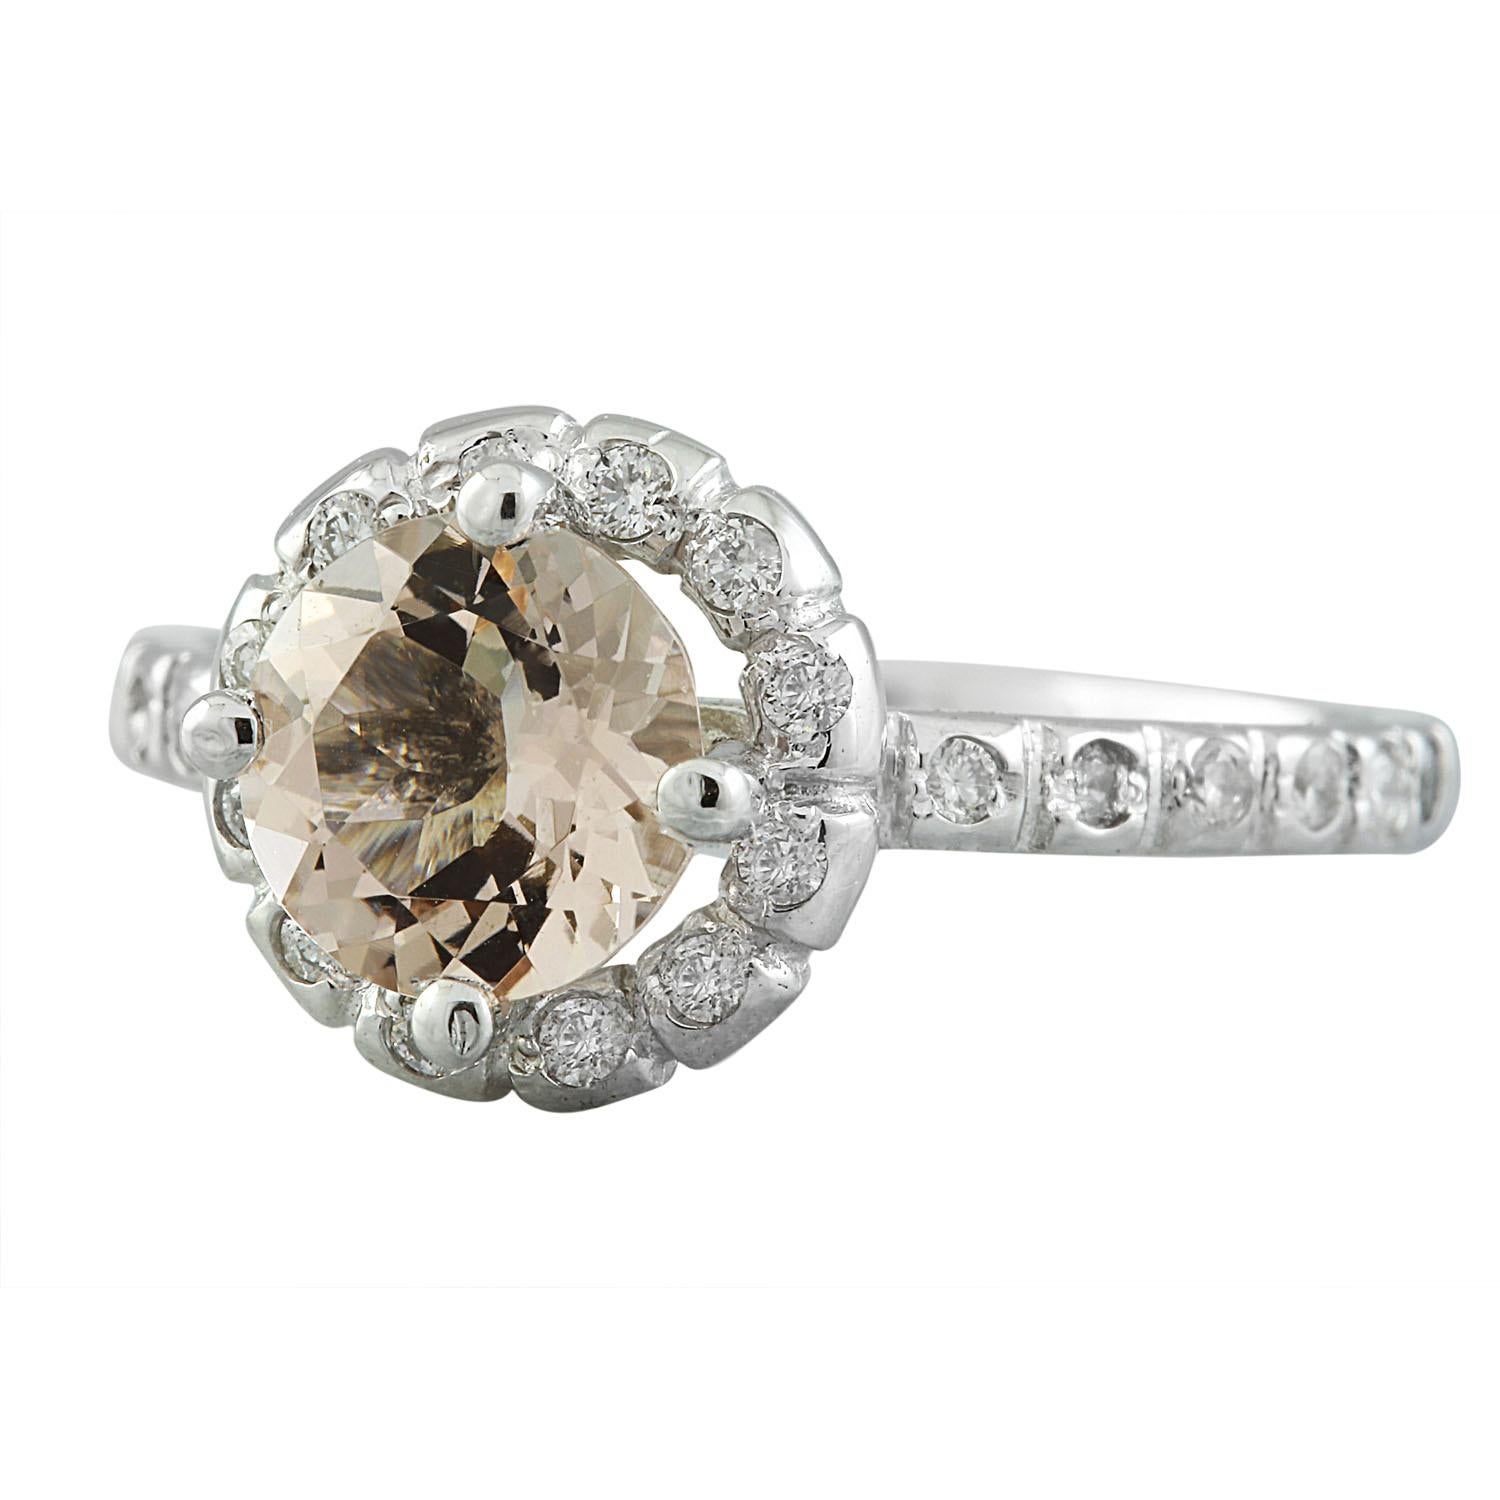 1.34 Carat Natural Morganite 14 Karat Solid White Gold Diamond Ring
Stamped: 14K 
Ring Size: 7 
Total Ring Weight: 3 Grams 
Morganite Weight: 1.10 Carat (6.75x6.75 Millimeter) 
Diamond Weight: 0.24 Carat (F-G Color, VS2-SI1 Clarity)
Quantity: